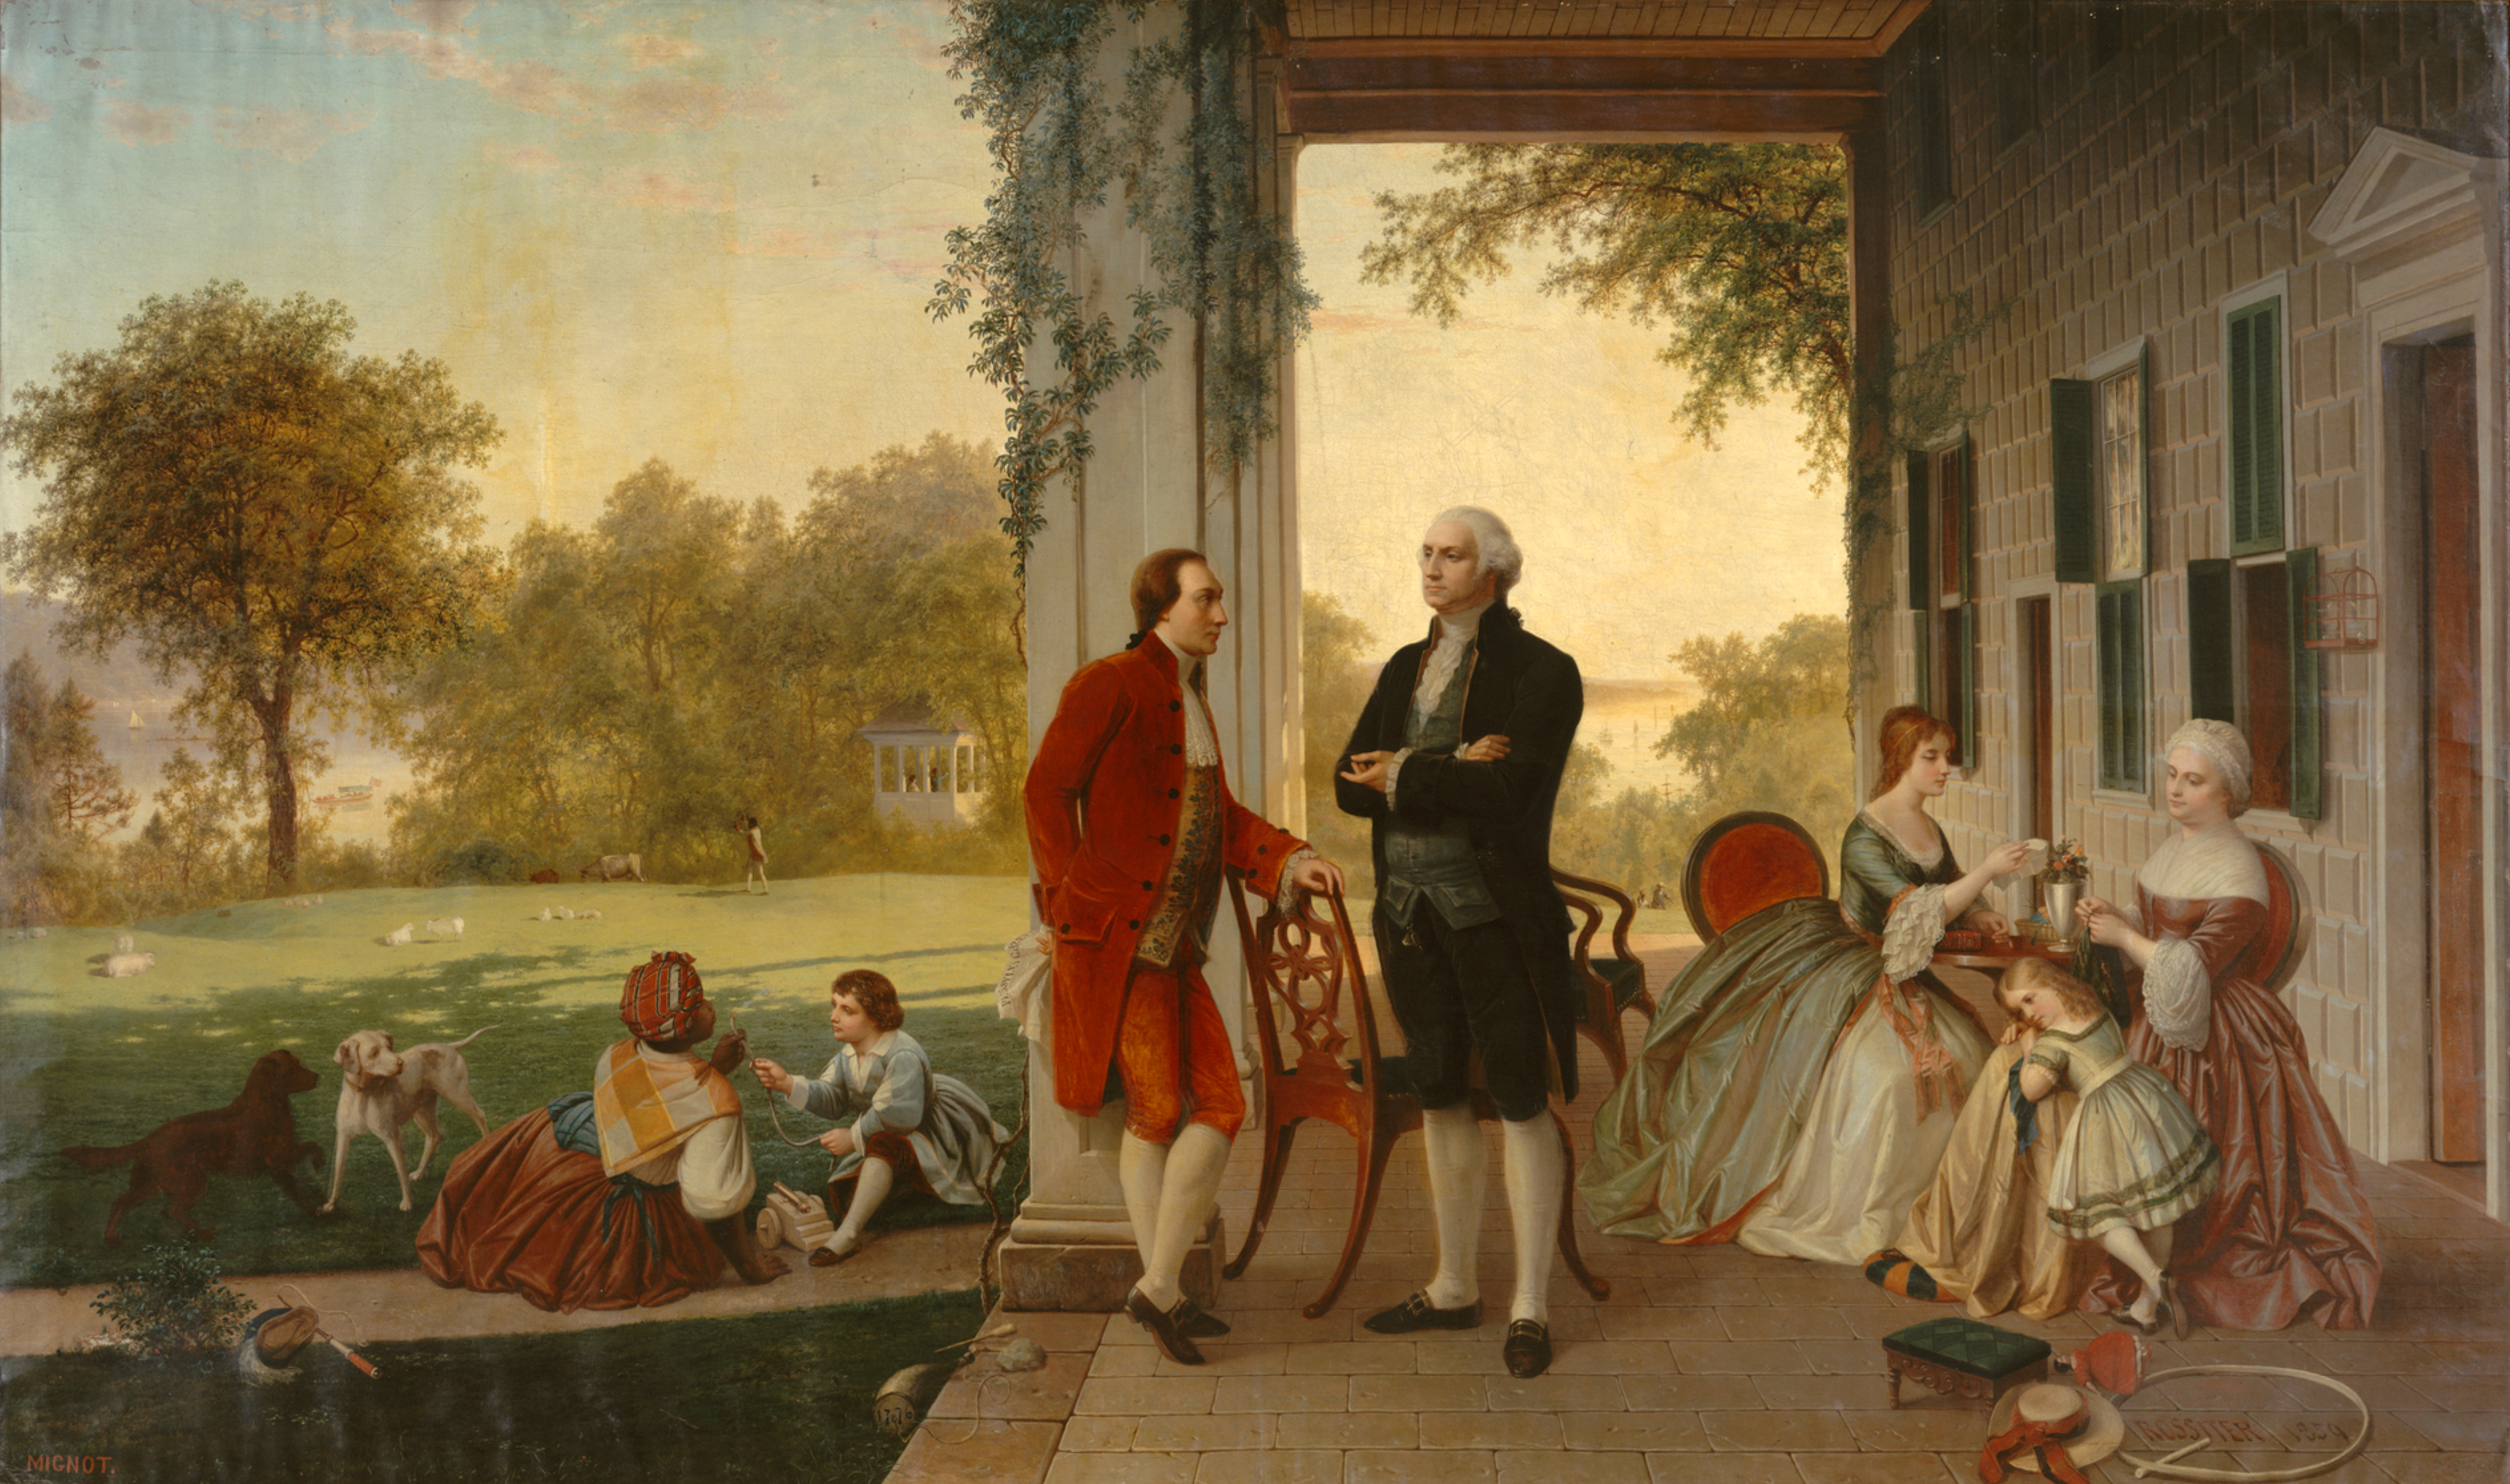 Painting of Lafayette and Washington